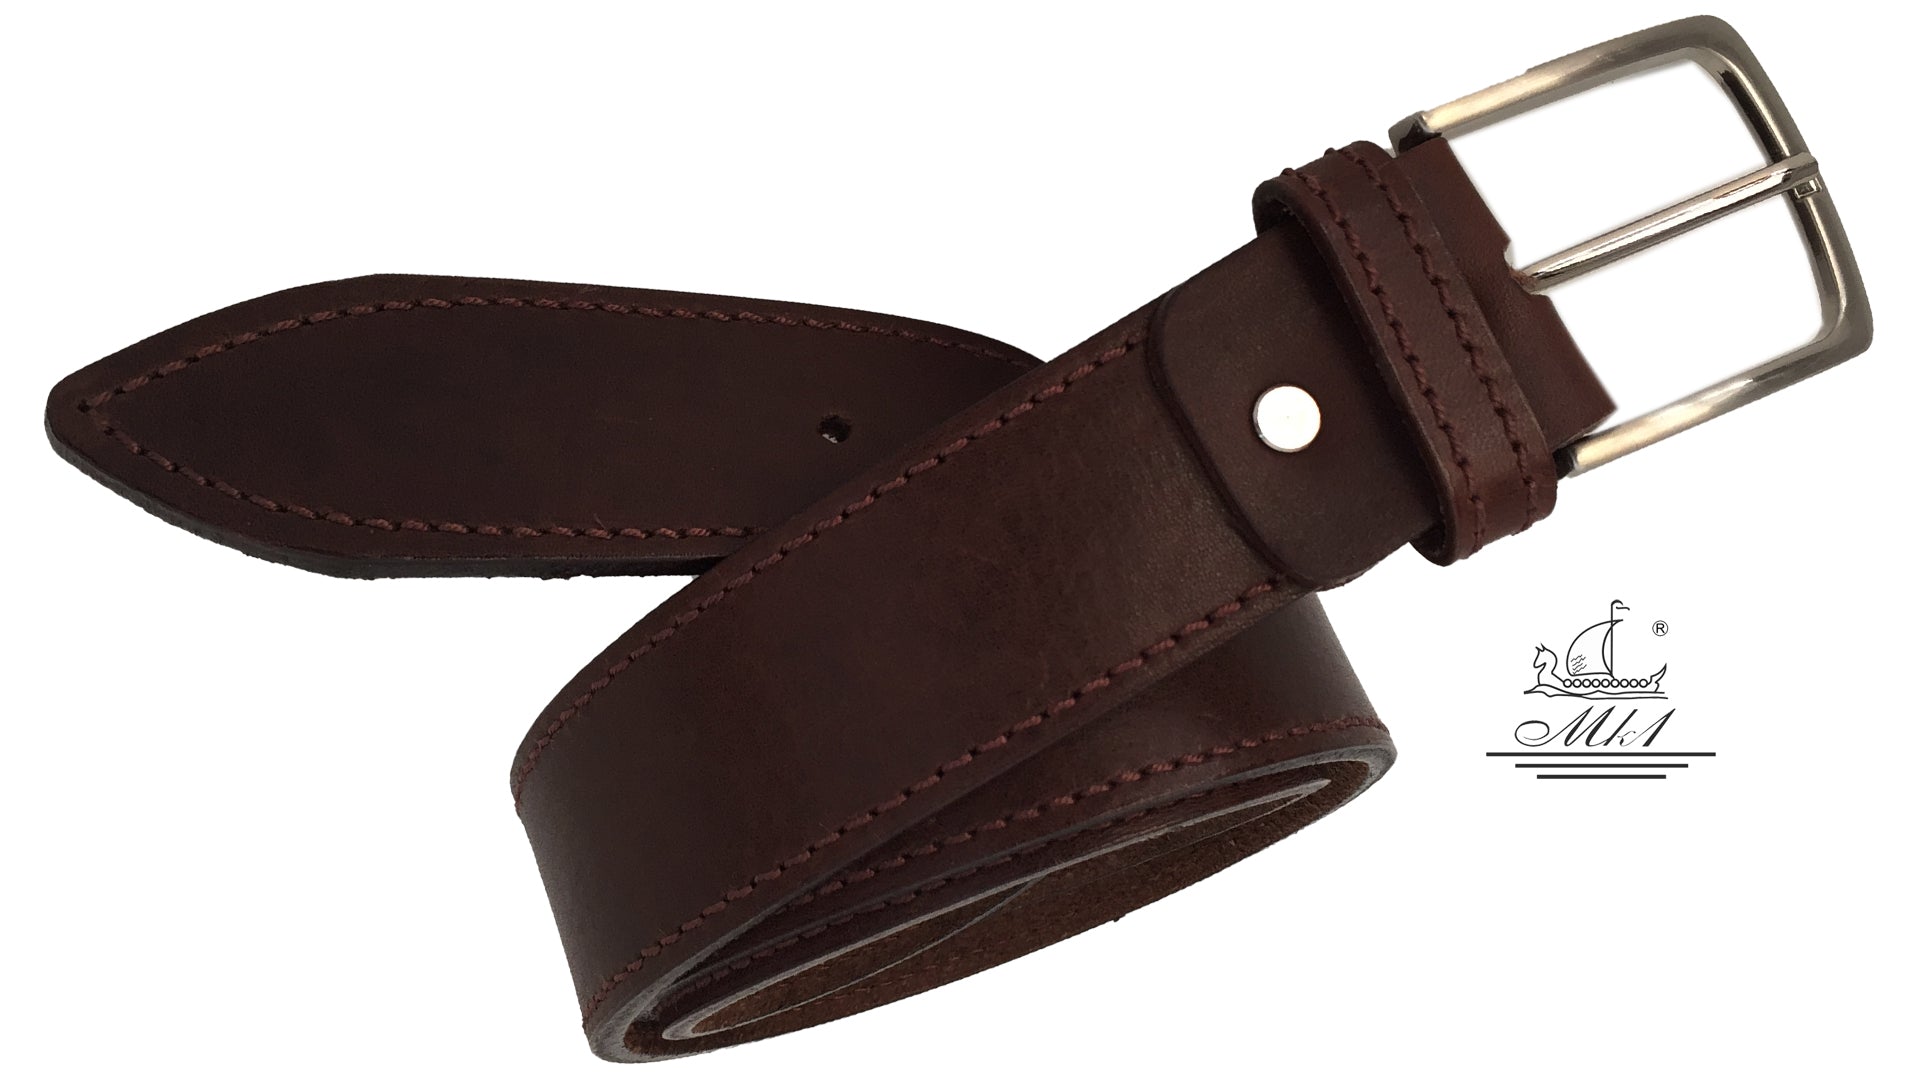 n2699/40k-g Hand made leather belt